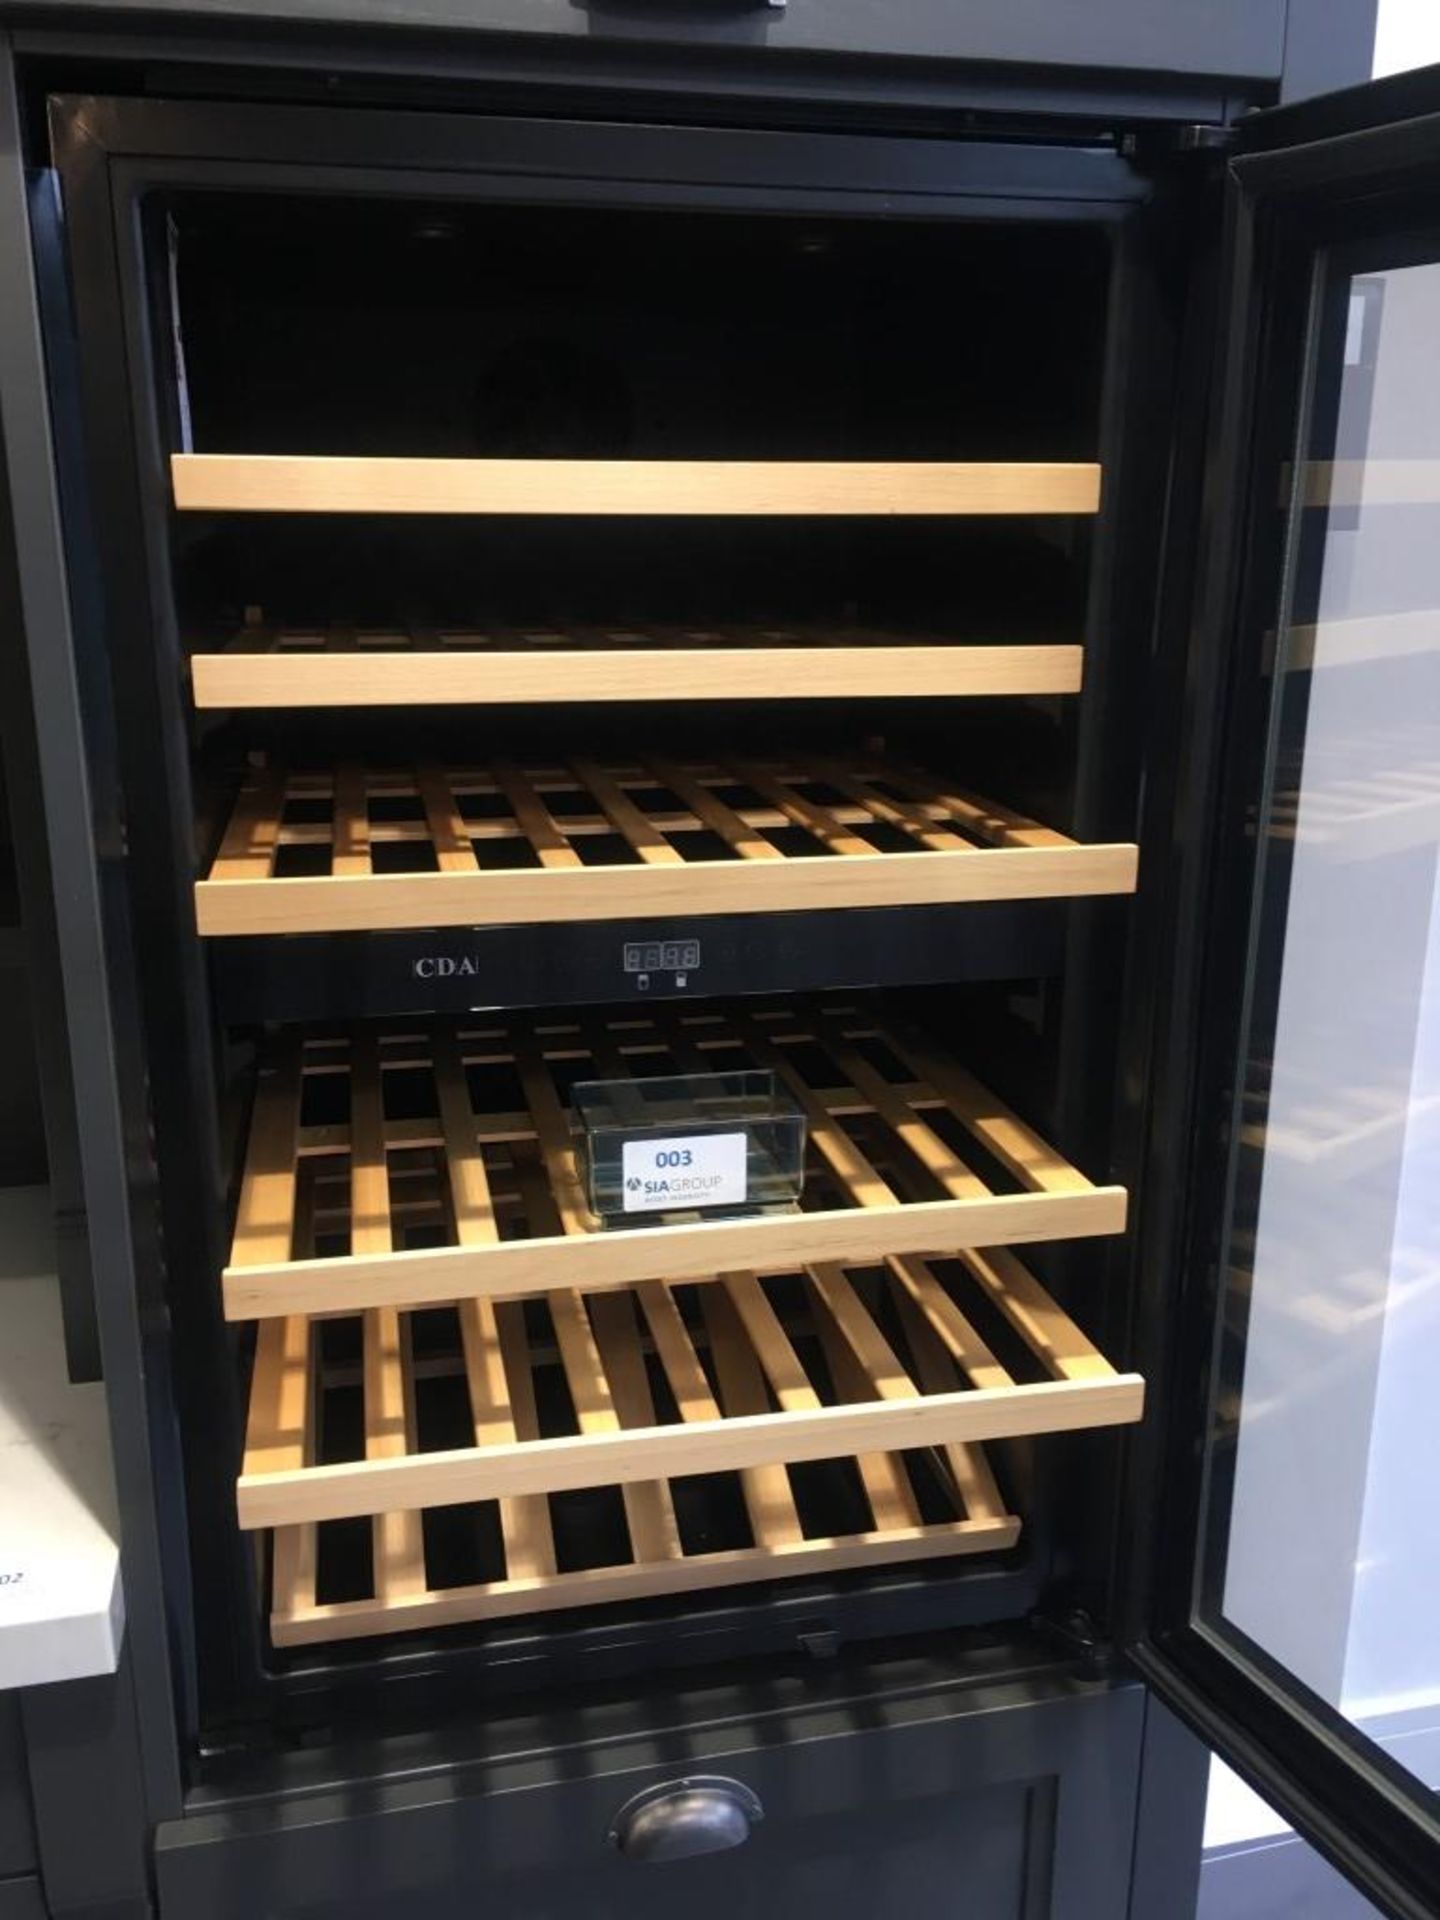 CDA FWV901 six shelf wine cooler - Image 2 of 4